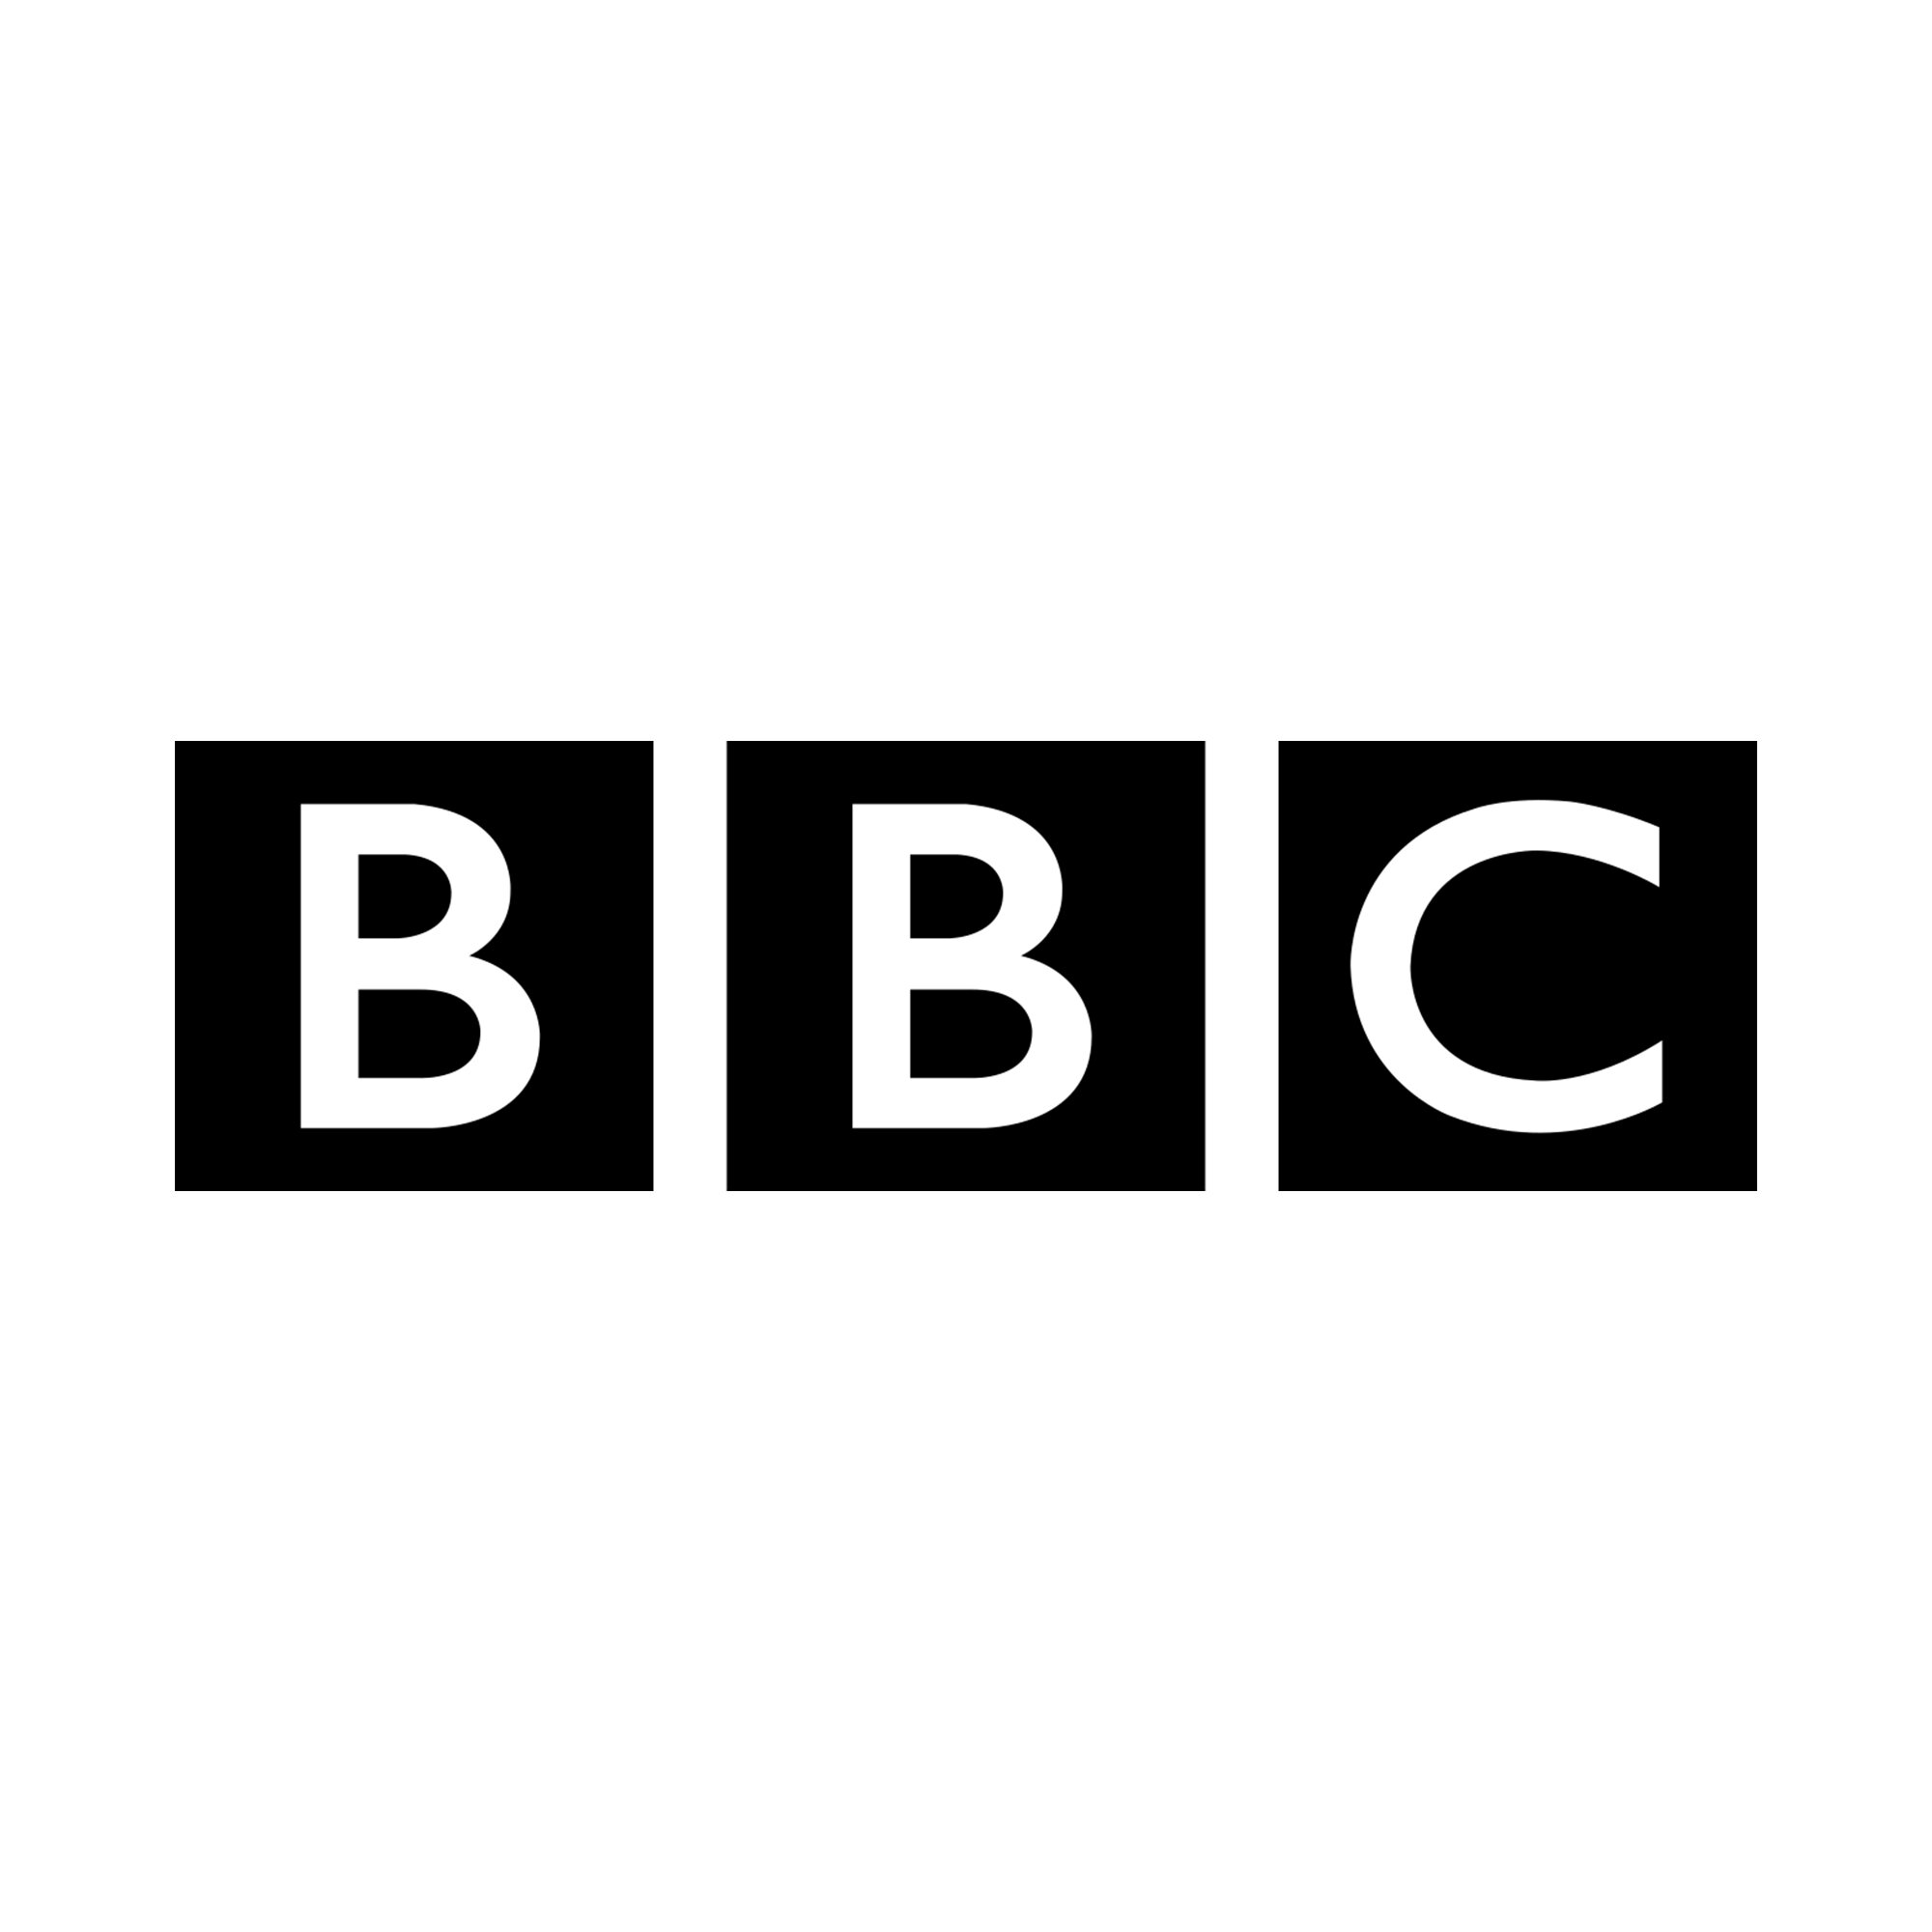 BBC Consulting Logo.jpg